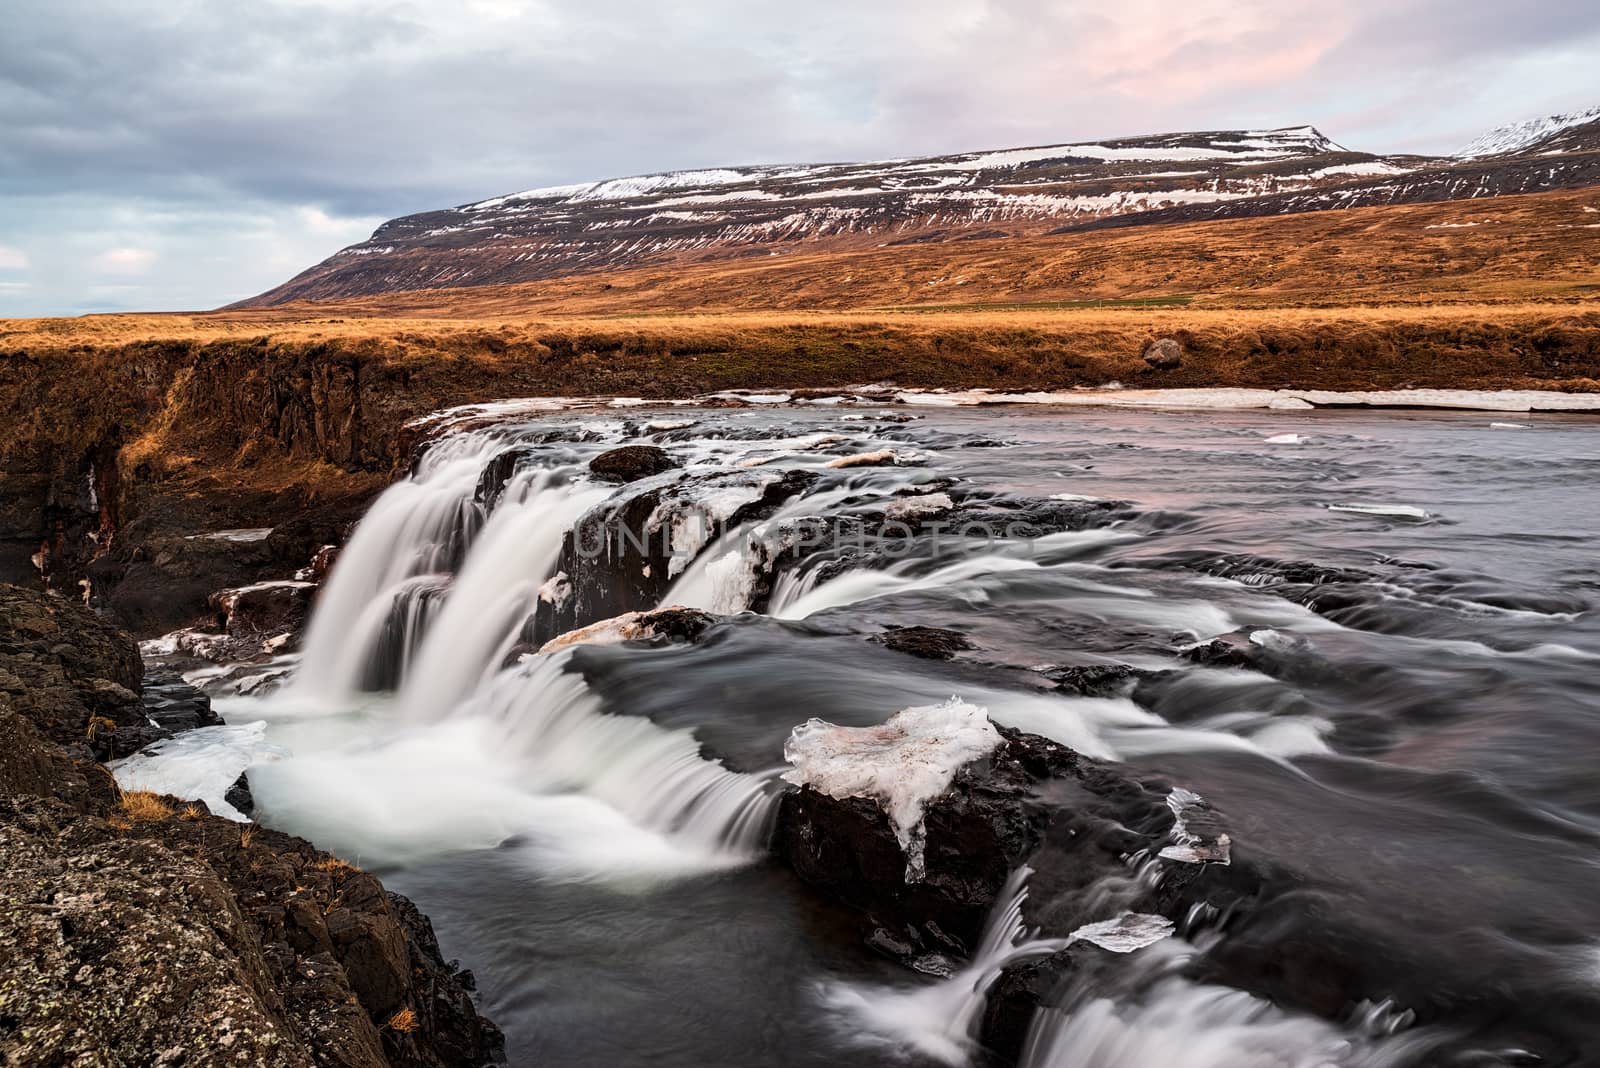 Kolugljufur waterfall in Iceland by LuigiMorbidelli